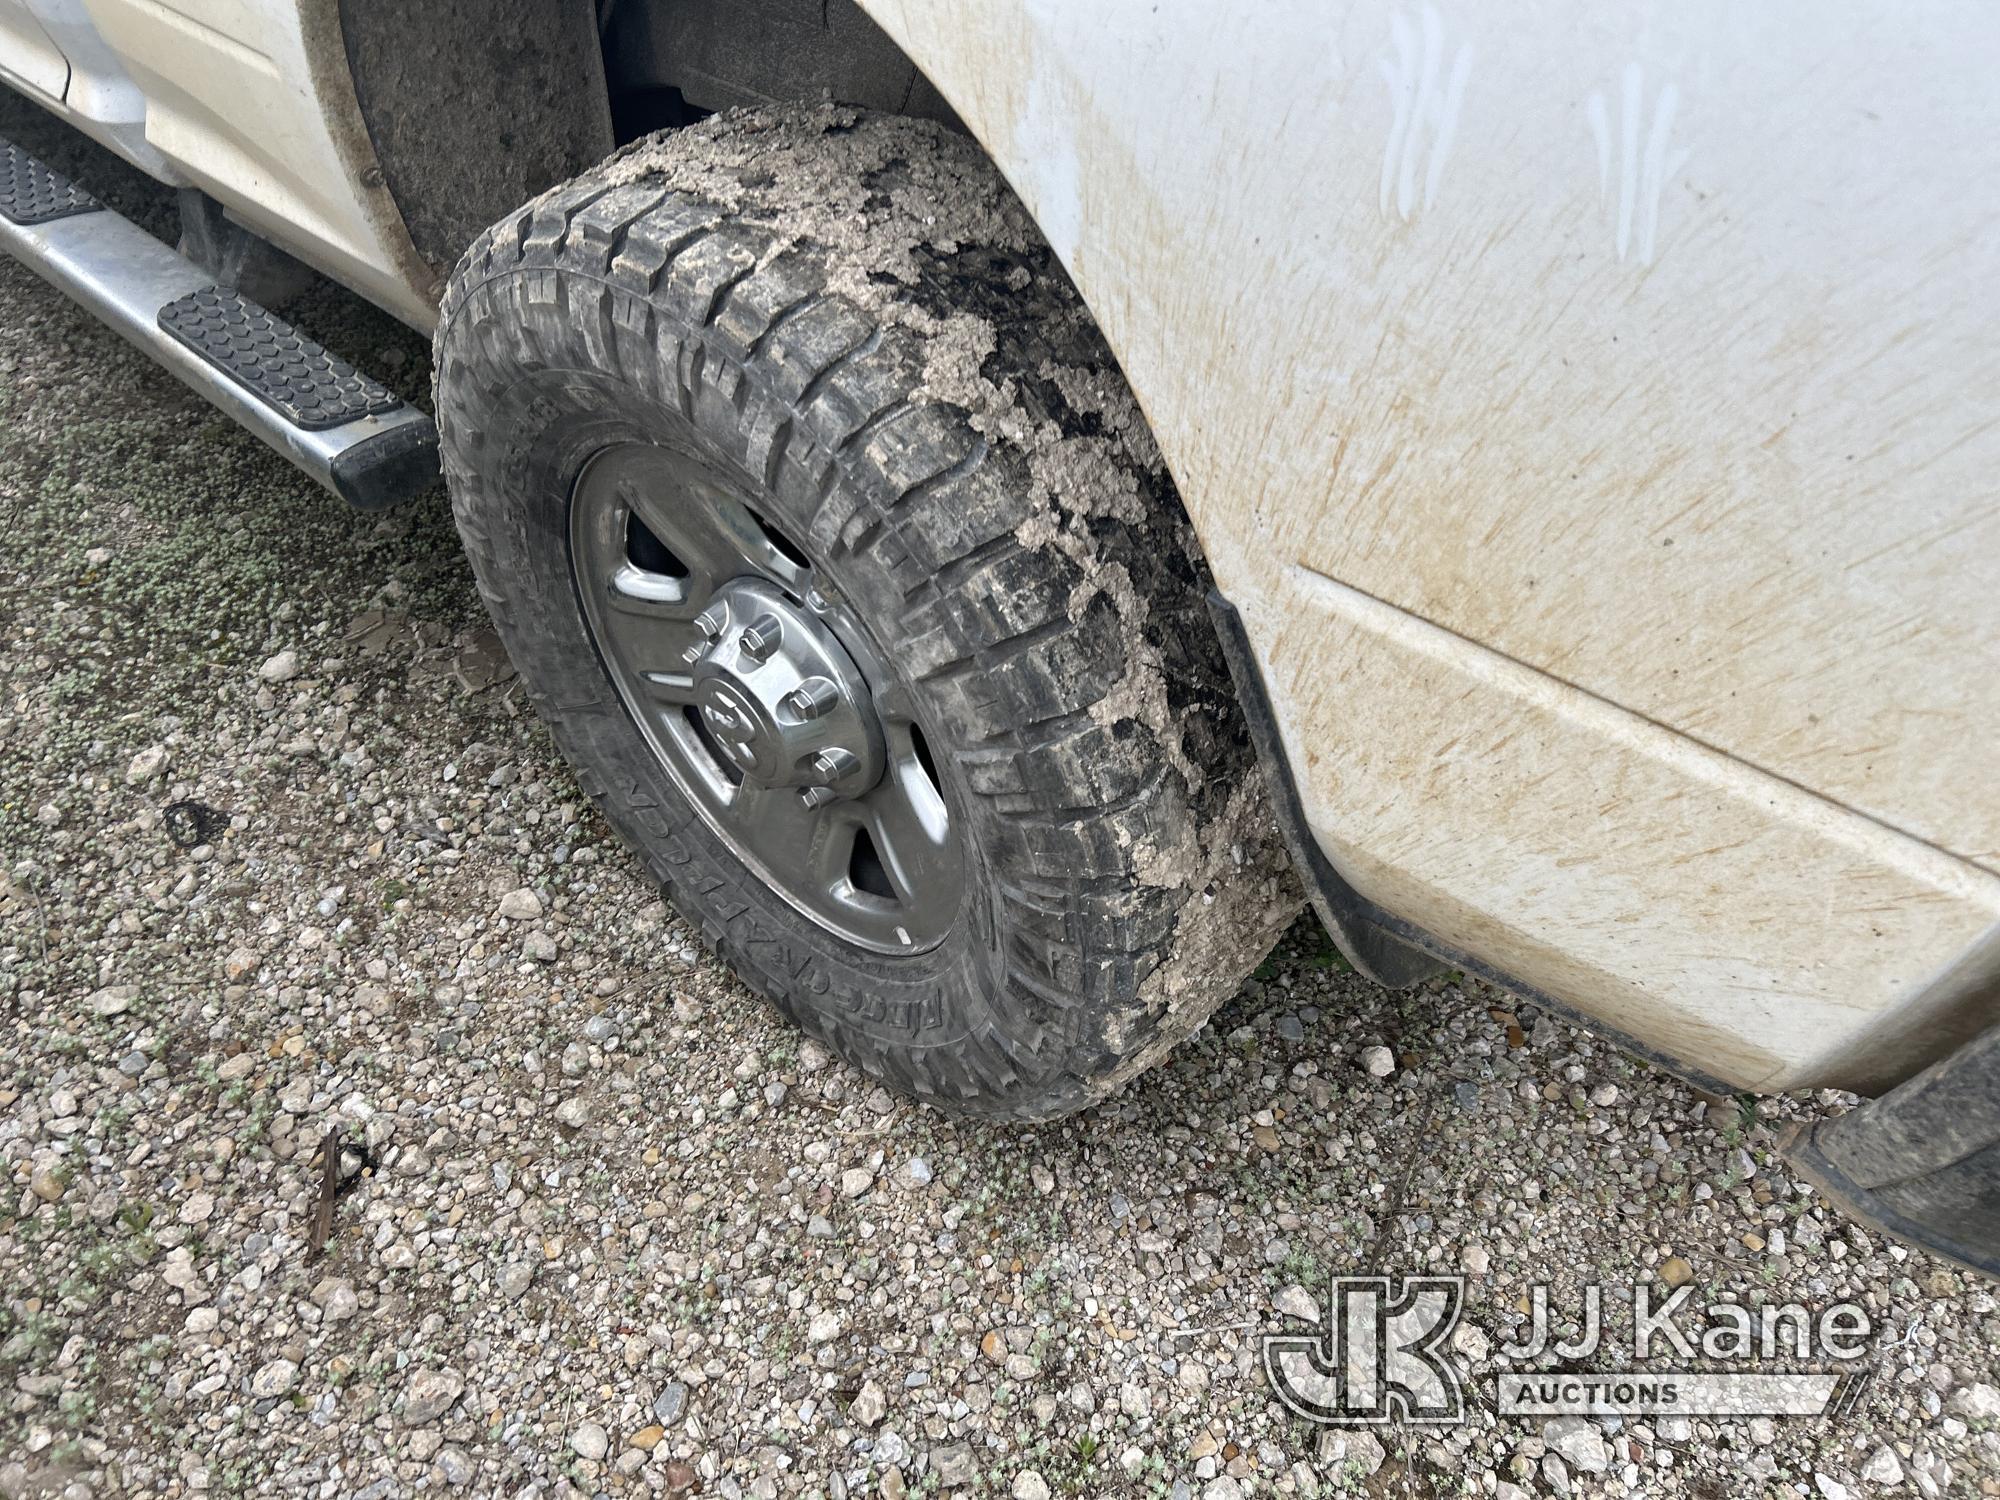 (Waxahachie, TX) 2019 RAM 2500 4x4 Crew-Cab Pickup Truck Runs & Moves Rough) (Wrecked, Airbags Deplo